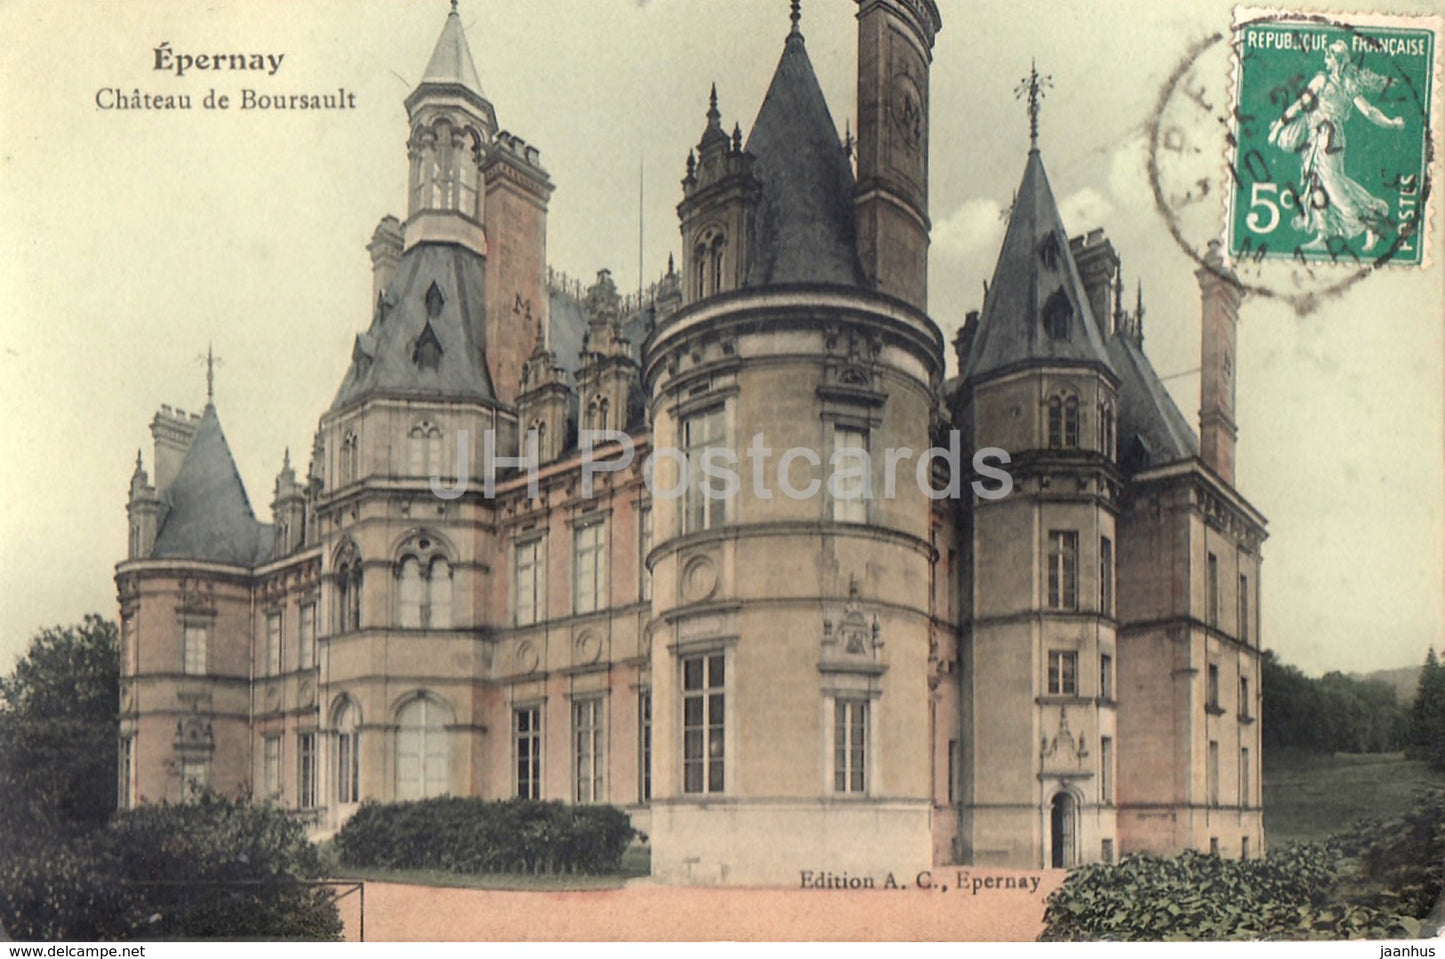 Epernay - Chateau de Boursault - castle - old postcard - 1913 - France - used